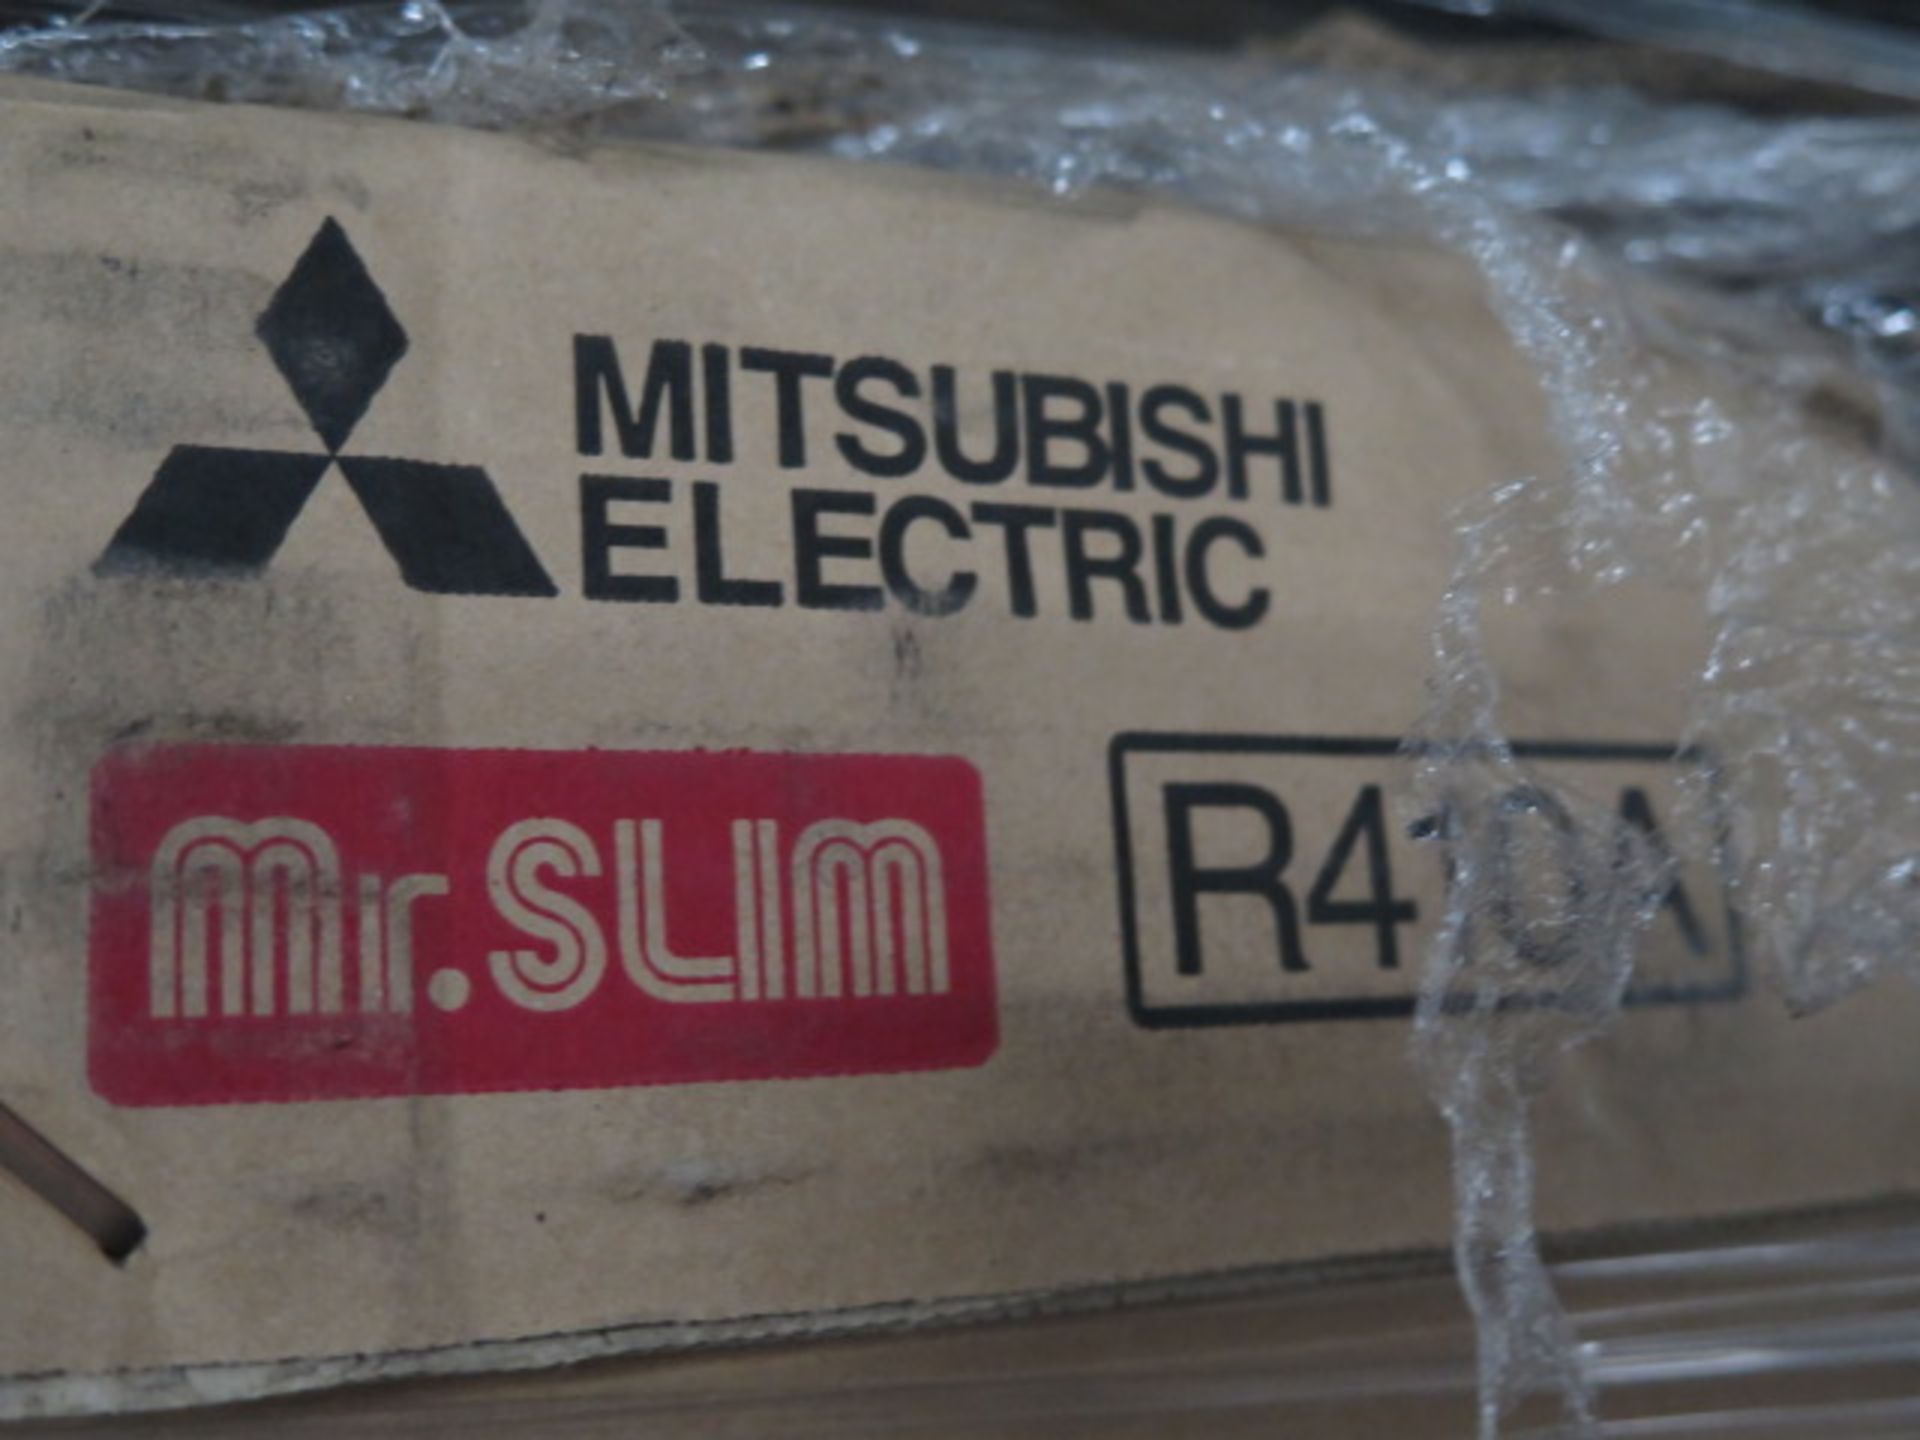 Mitsubishi (2)PUZ-A36NHA3 Heat Pumps w/ PEAD-A36AA5 Ceiling Cassettes - Image 2 of 3